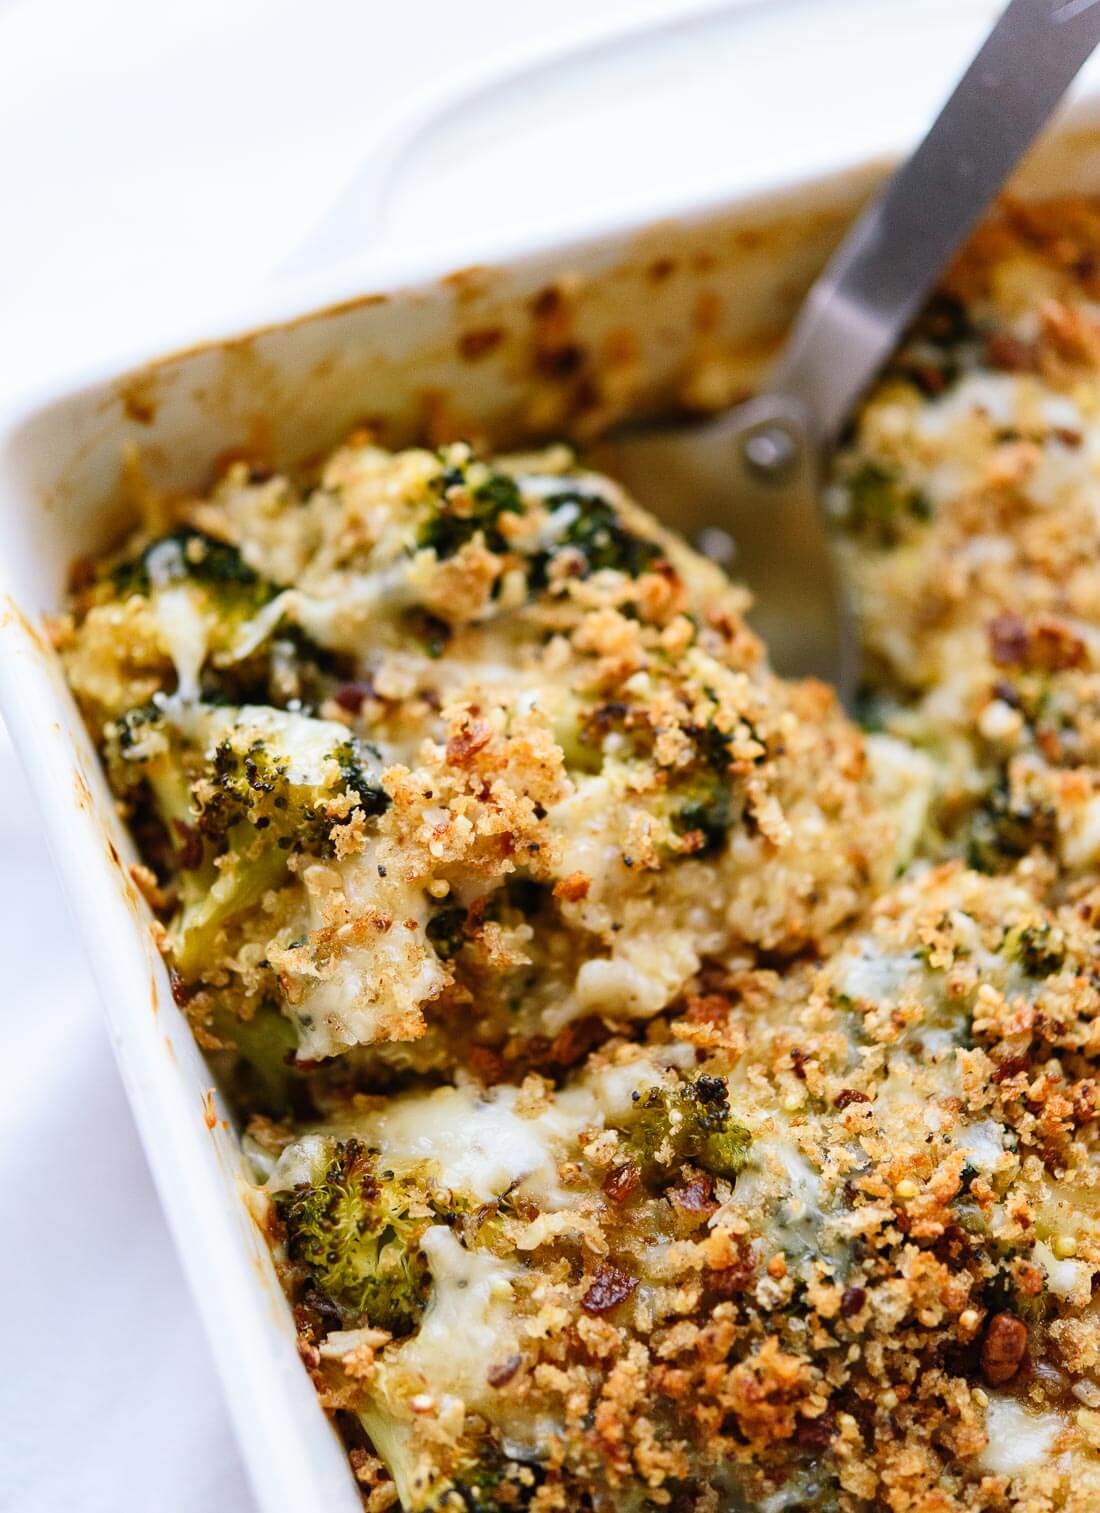 Broccoli casserole recipe, featuring roasted broccoli, cheddar cheese, quinoa and crispy breadcrumbs. - cookieandkate.com